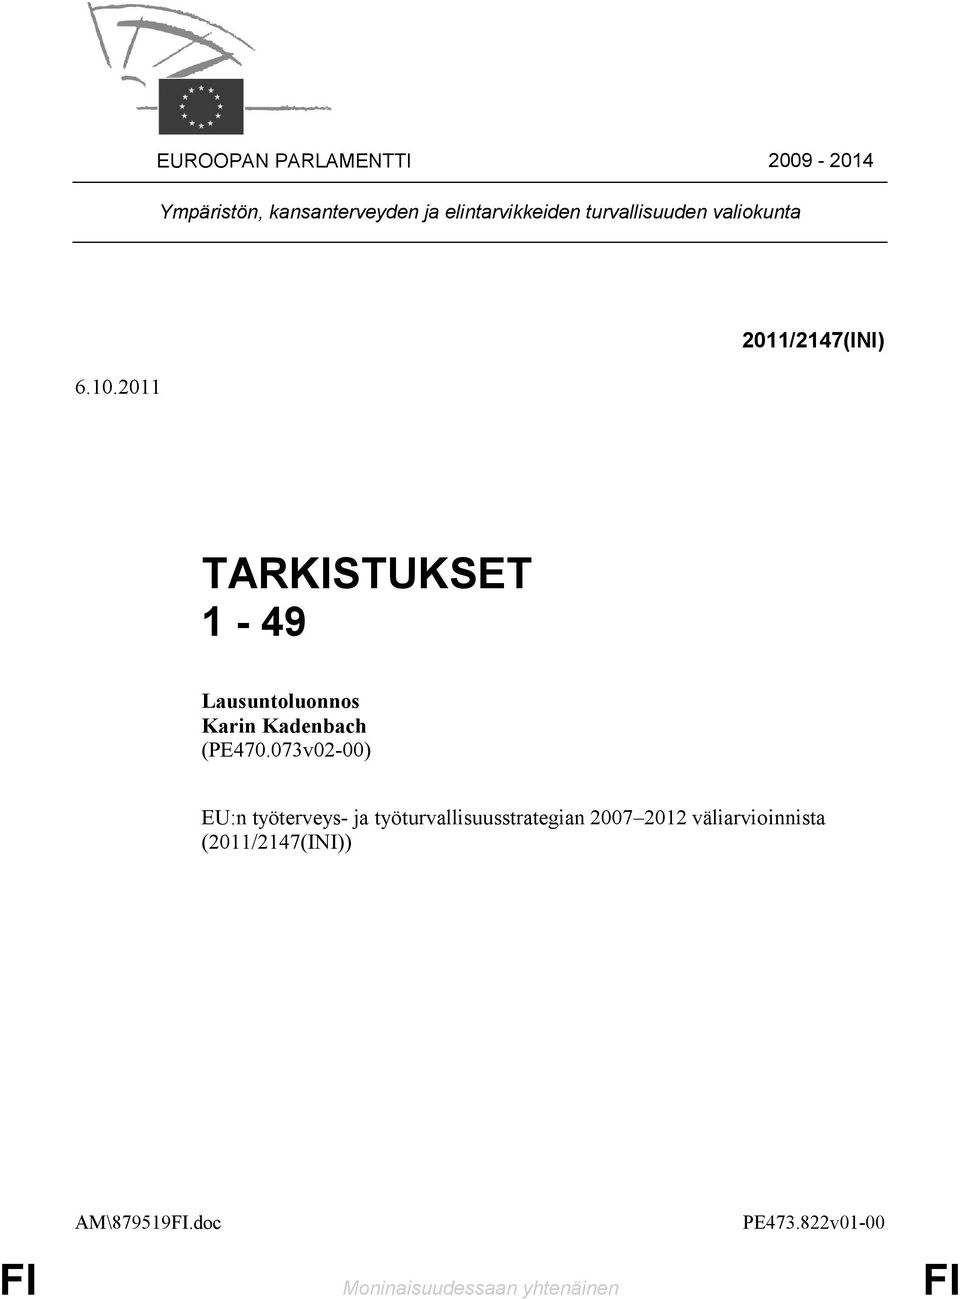 2011 2011/2147(INI) TARKISTUKSET 1-49 Karin Kadenbach (PE470.